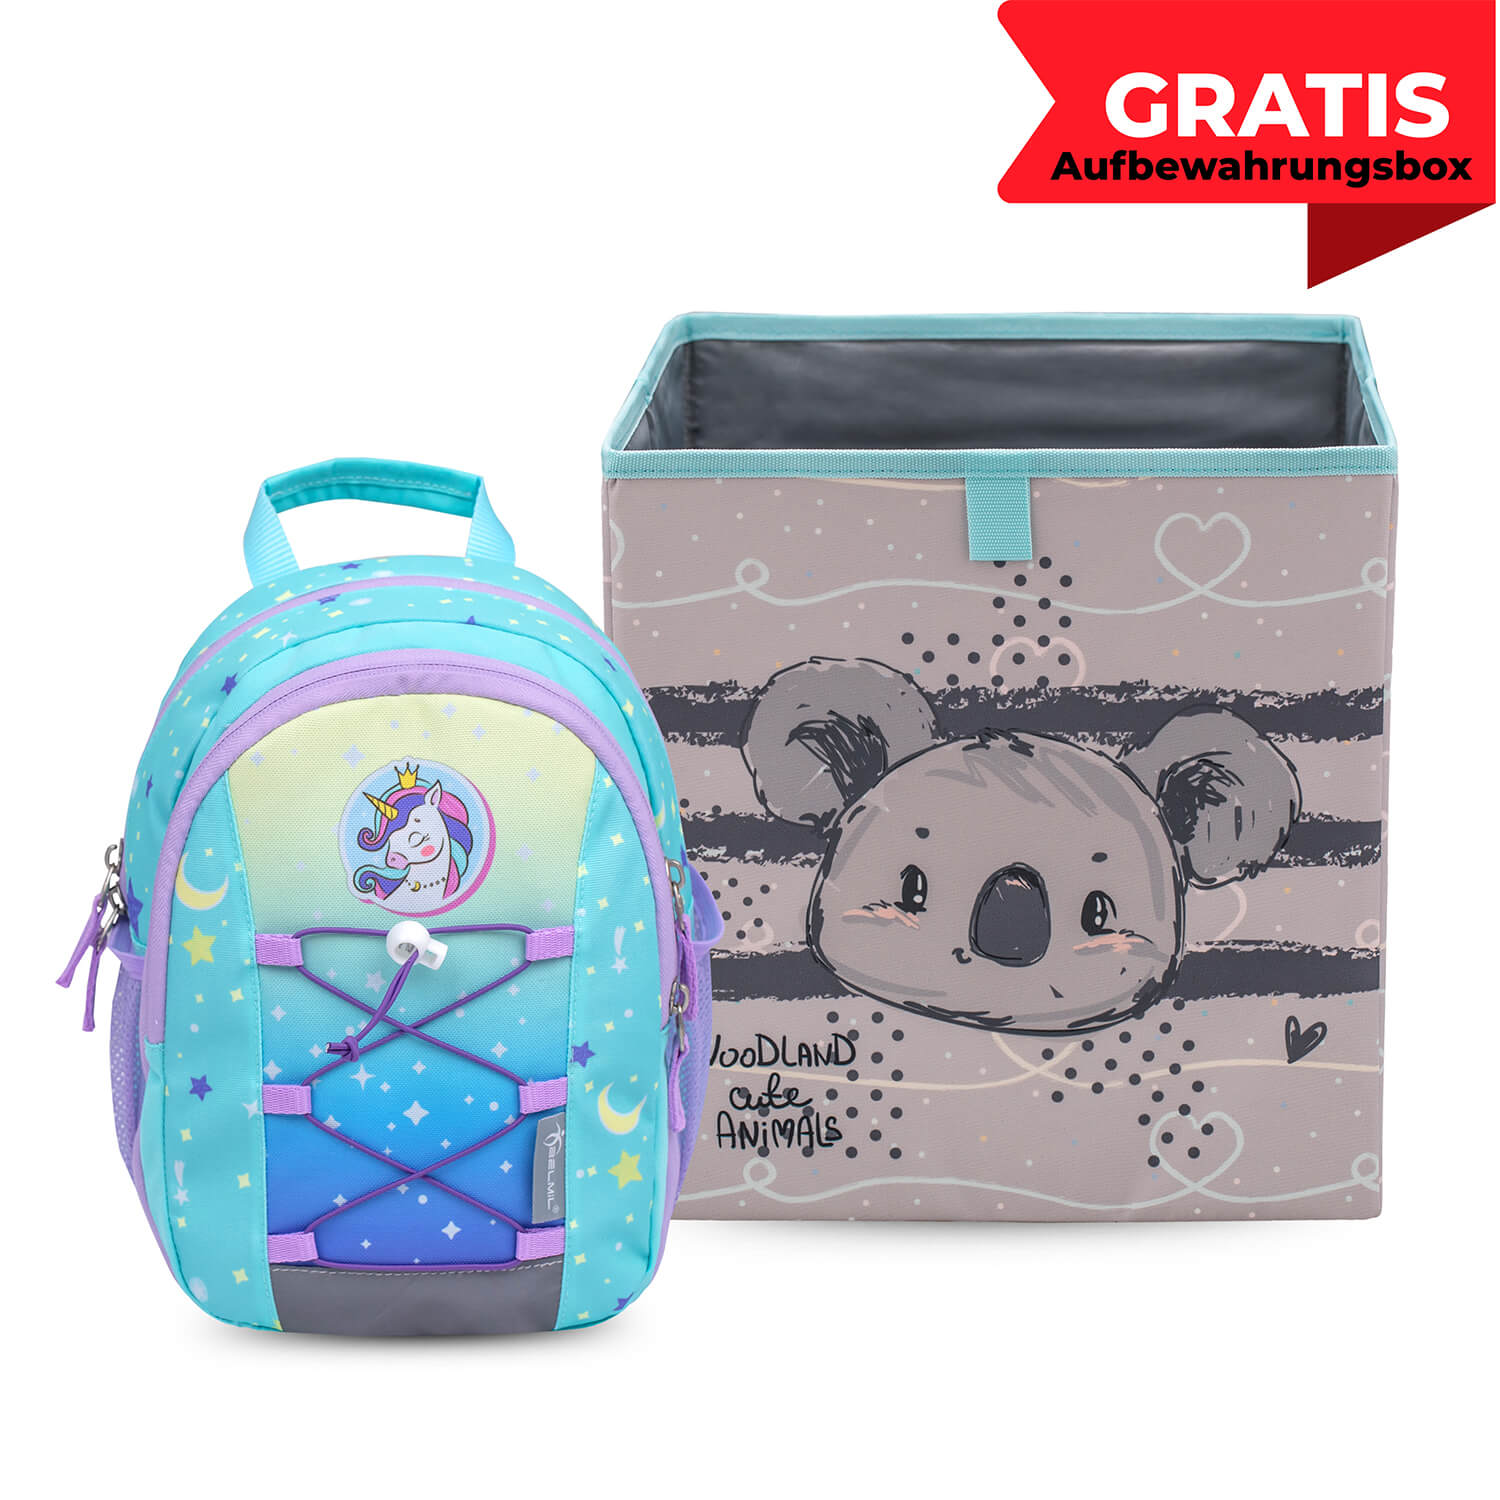 Mini Kiddy Cute Unicorn Kindergarten Bag with GRATIS Storage box